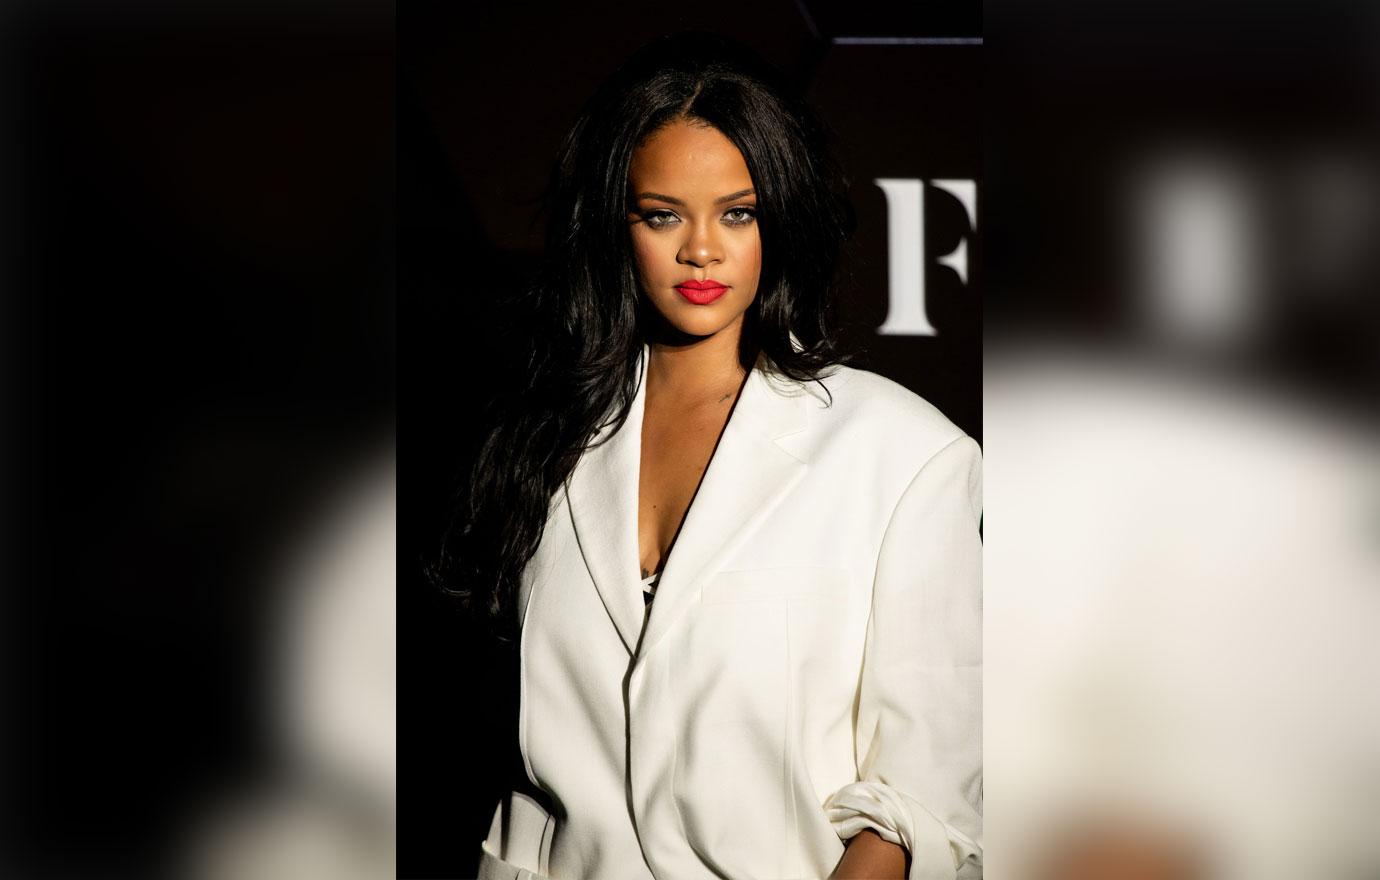 Old School Love: Rihanna and Jay-Z Send Roses to Senior Center After  Hilarious Viral Halftime Performance - Black Enterprise